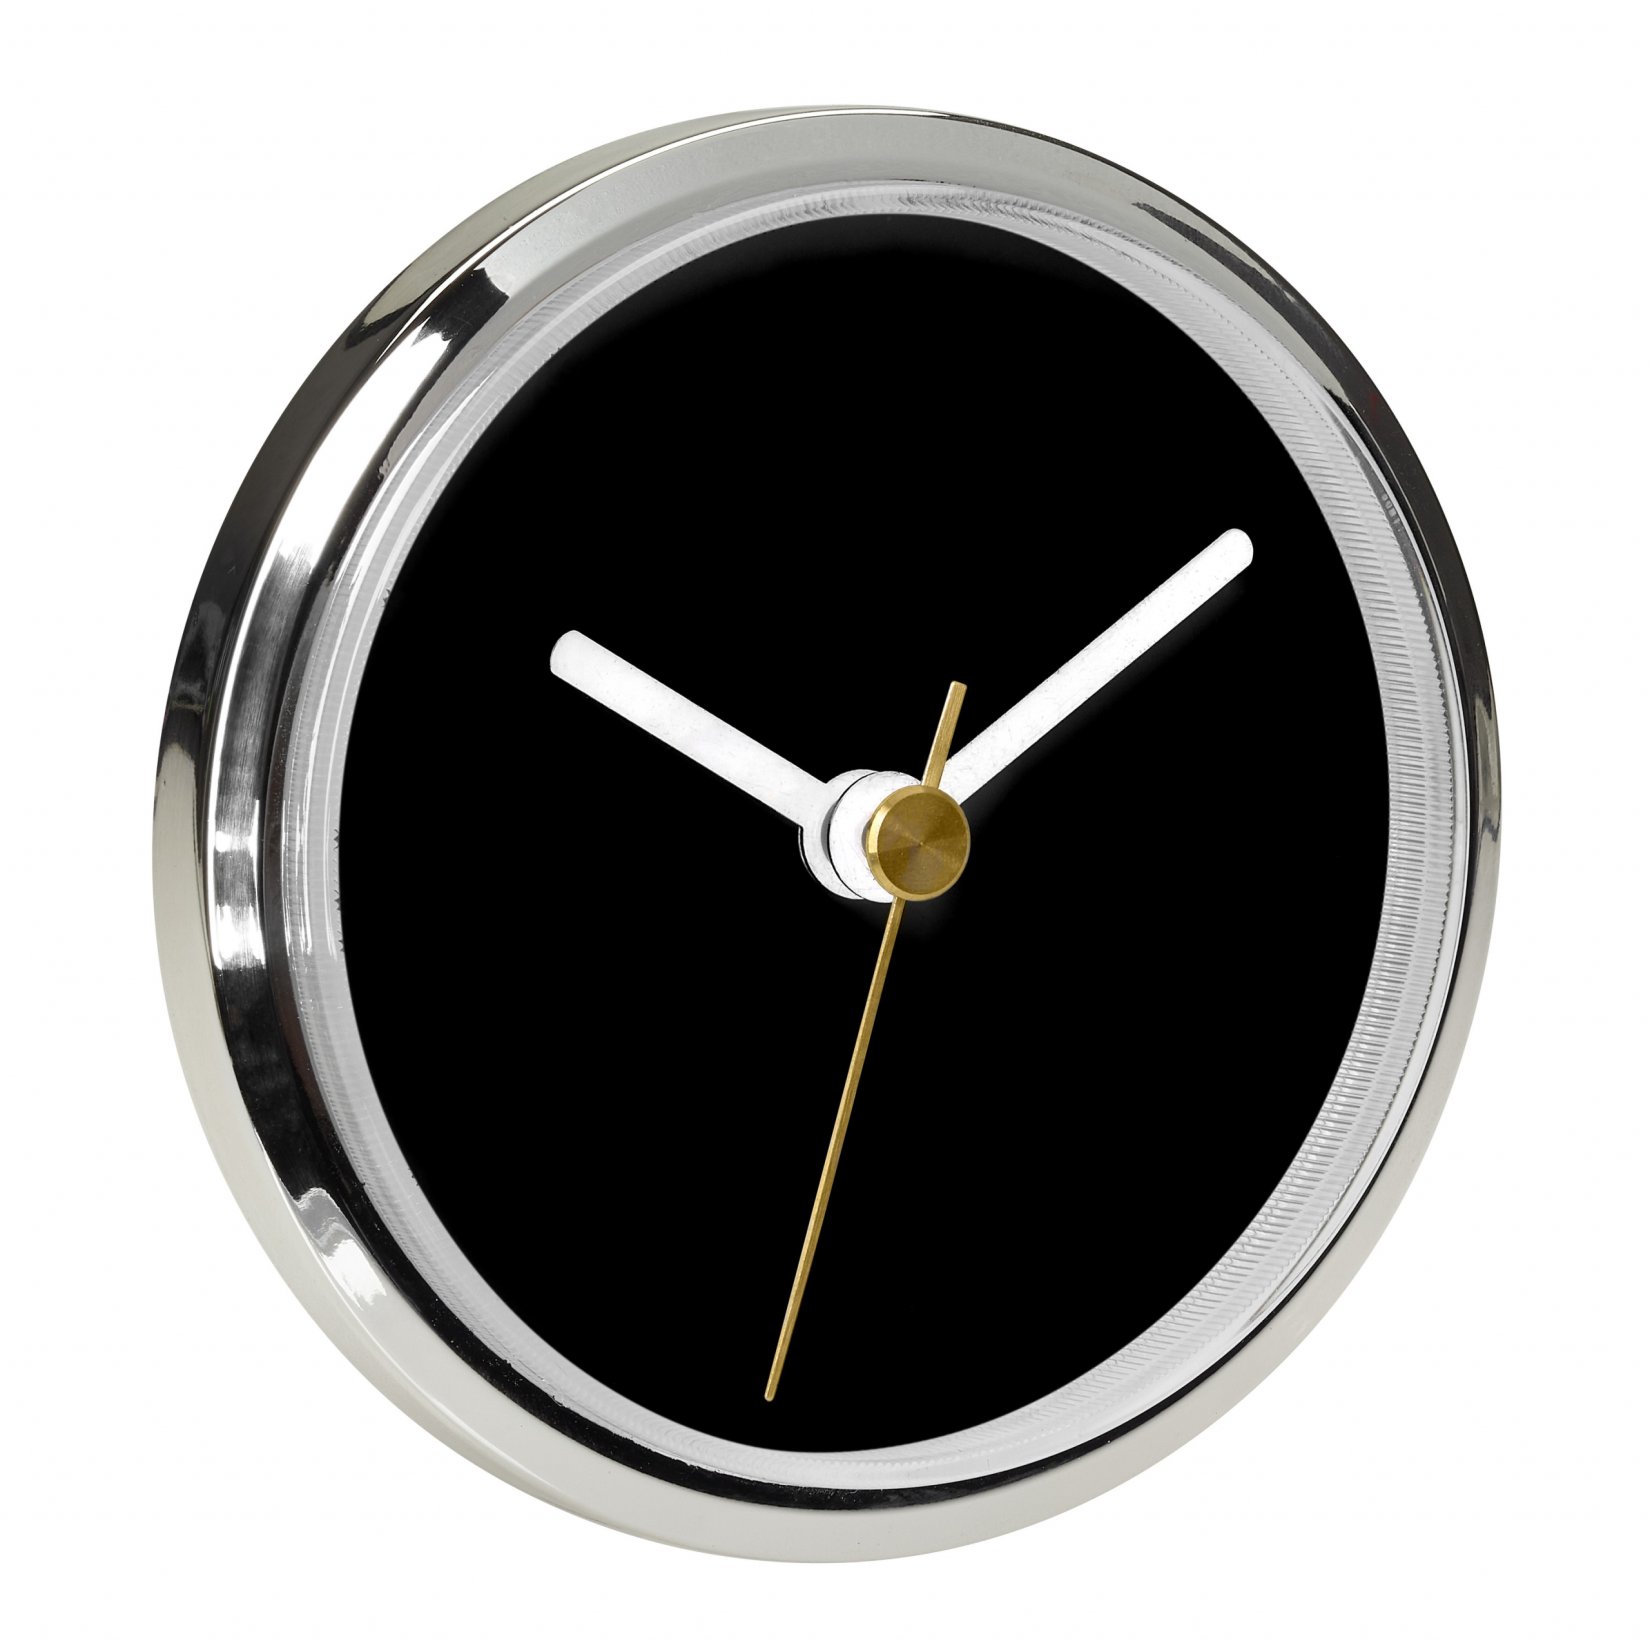 Built-in quartz clock with two dials